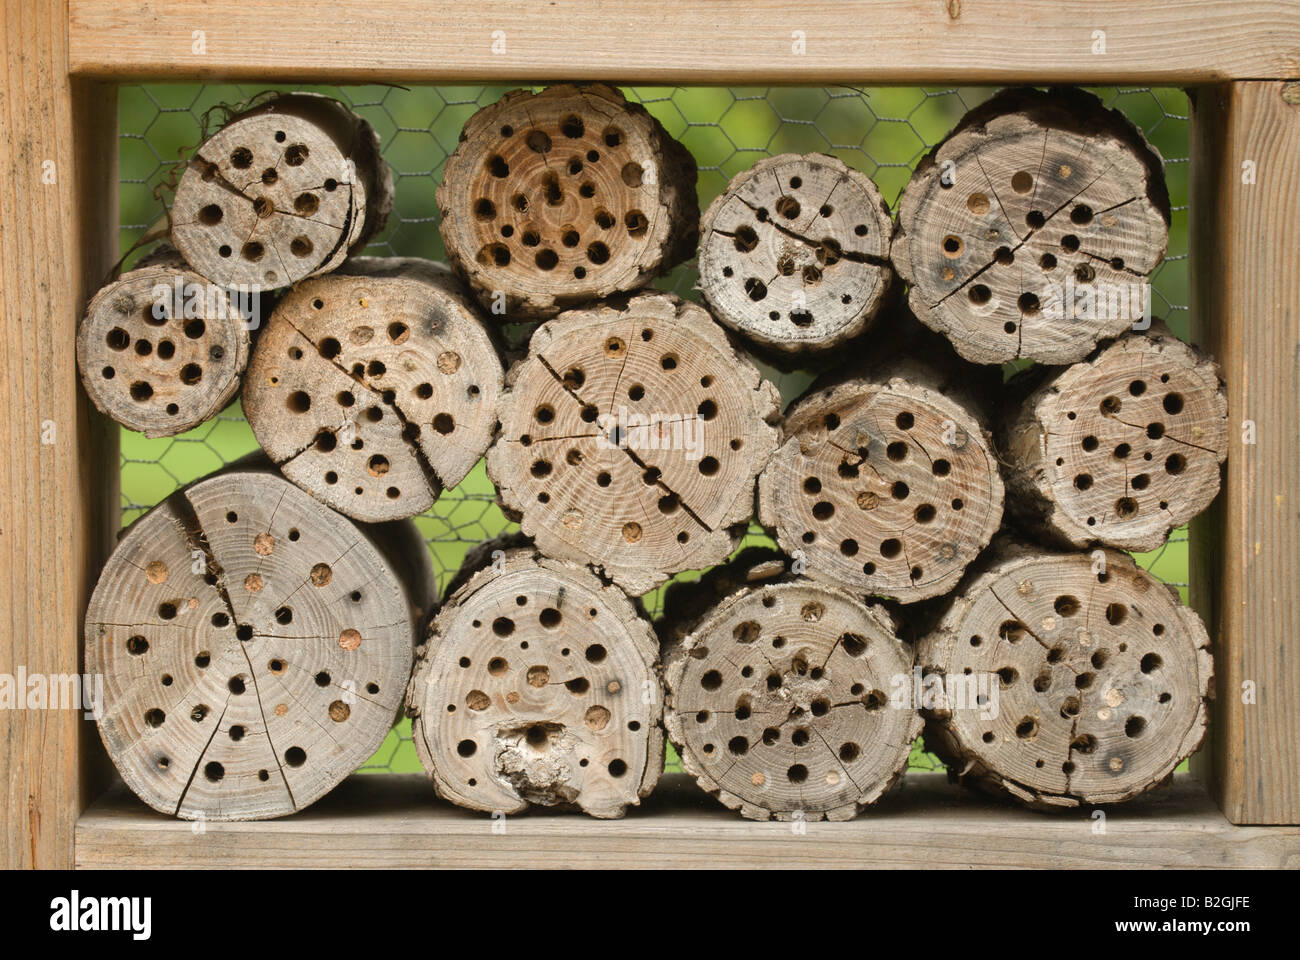 Bruthilfe für solitäre Insekten Bienen Wespen honey be cootie honigbiene apis breeder incubator brutkasten Stock Photo